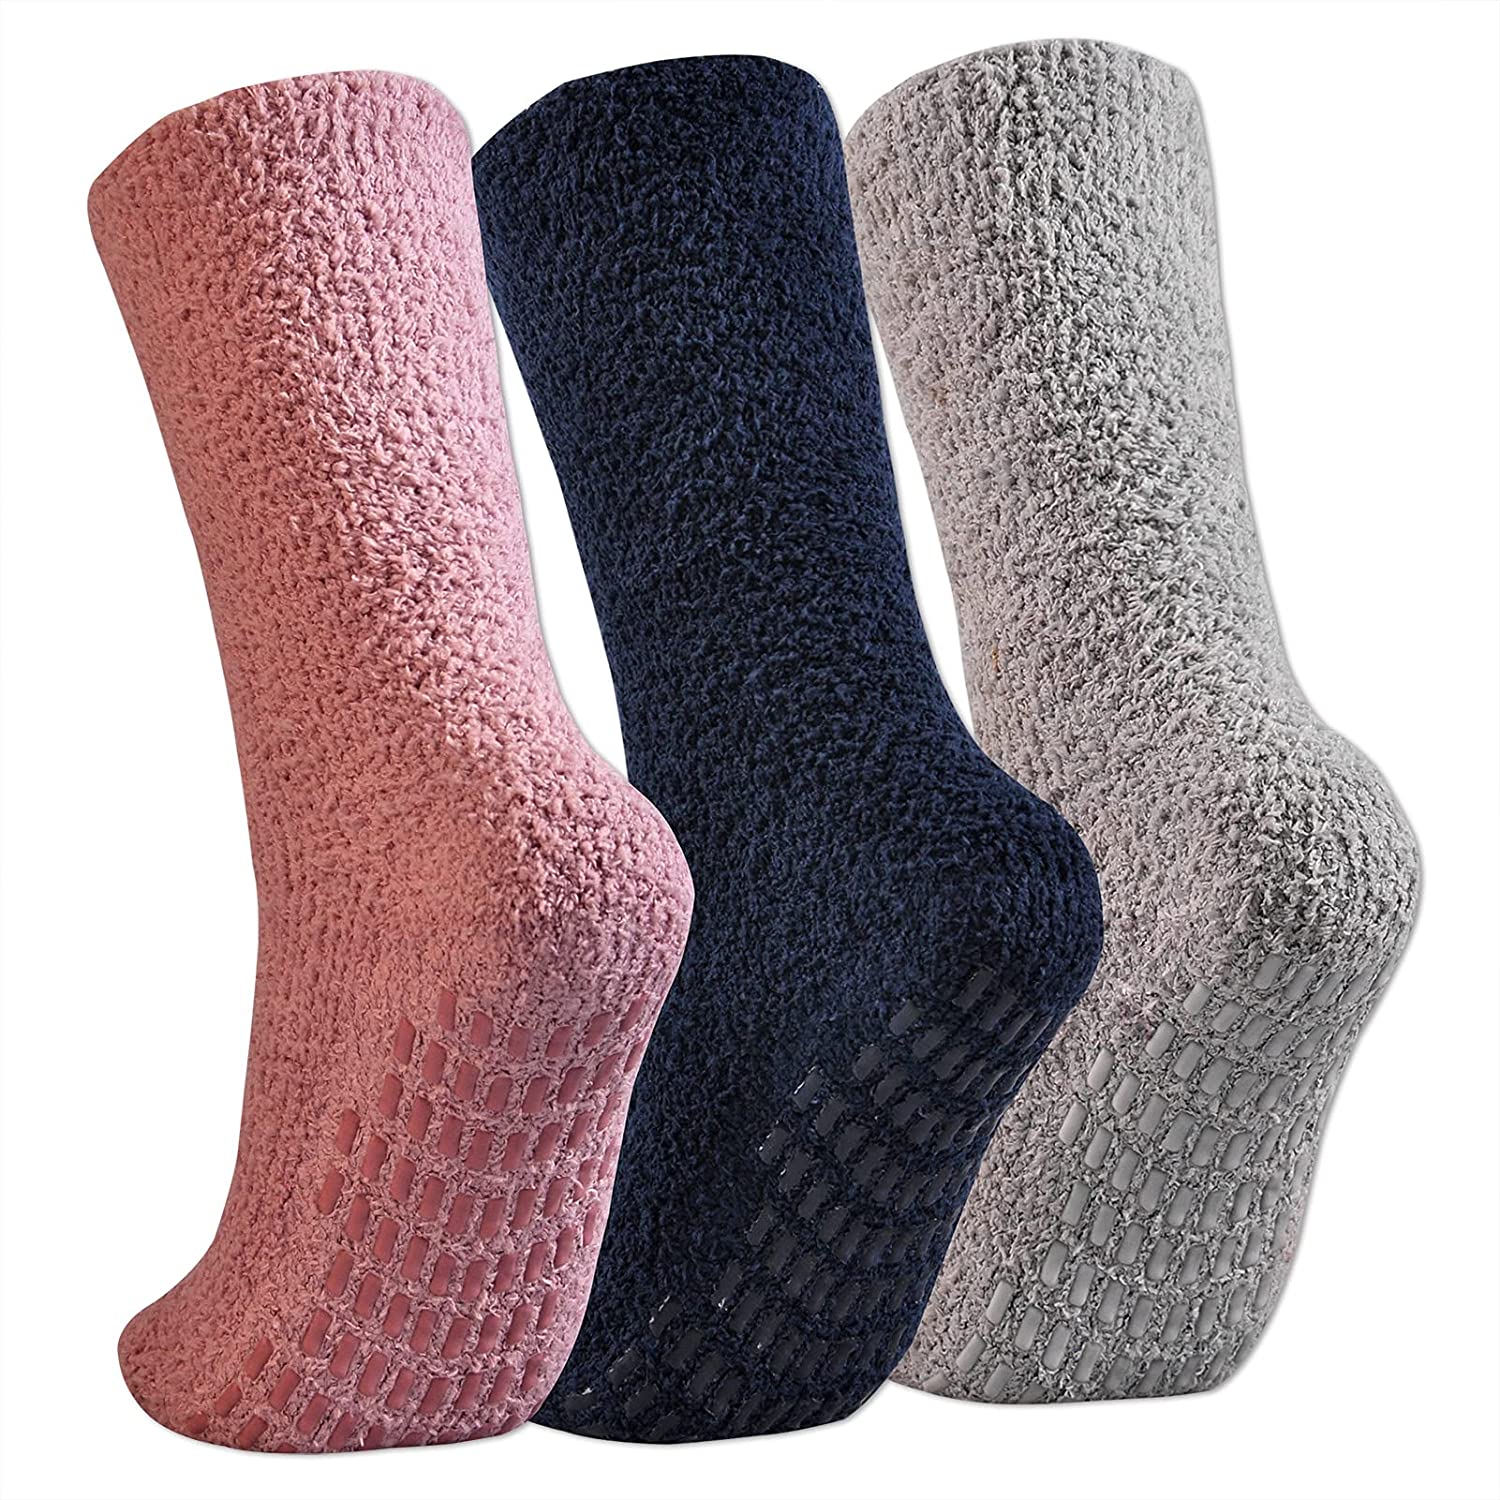 Fuzzy Gripper Socks - The College Crib